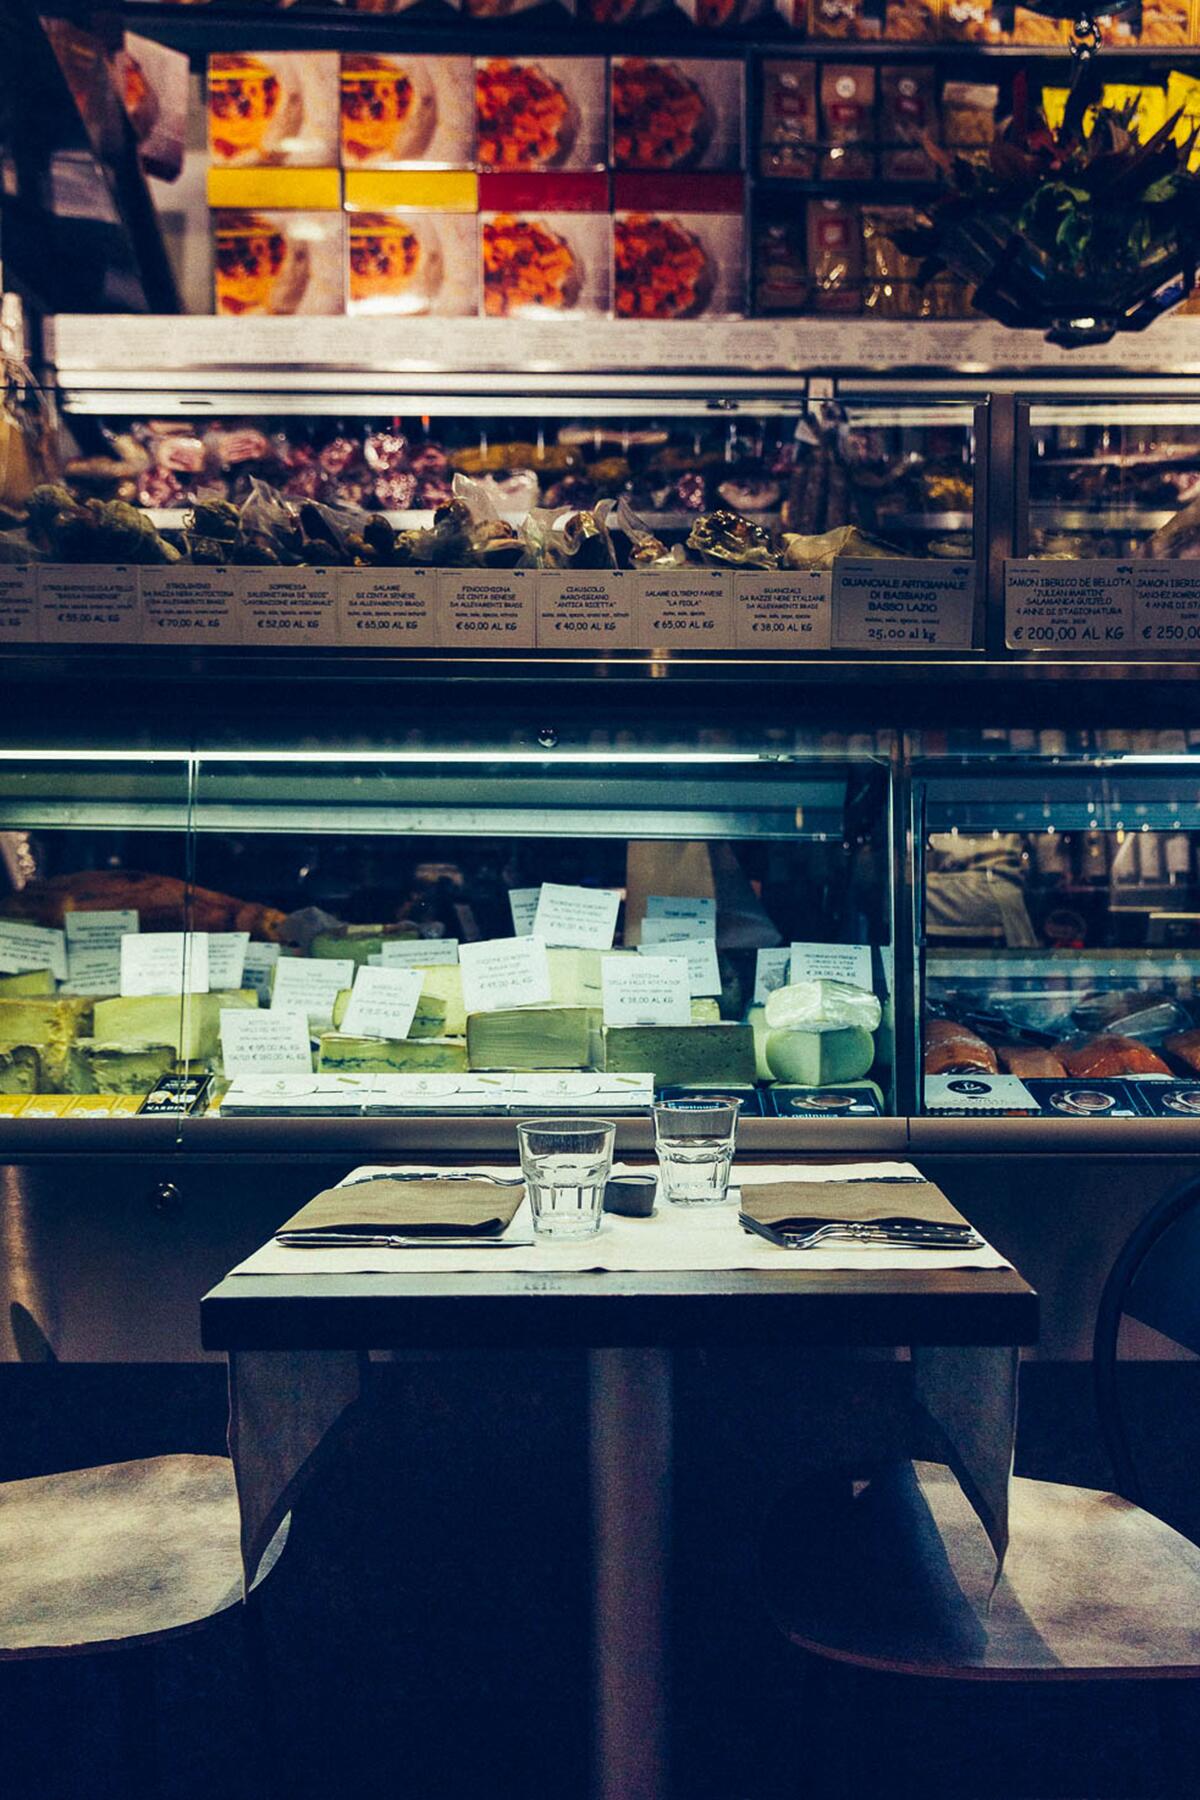 <a href='https://www.fodors.com/world/europe/italy/rome/experiences/news/photos/the-best-restaurants-in-rome#'>From &quot;The 20 Best Restaurants in Rome: Roscioli Salumeria con Cucina&quot;</a>